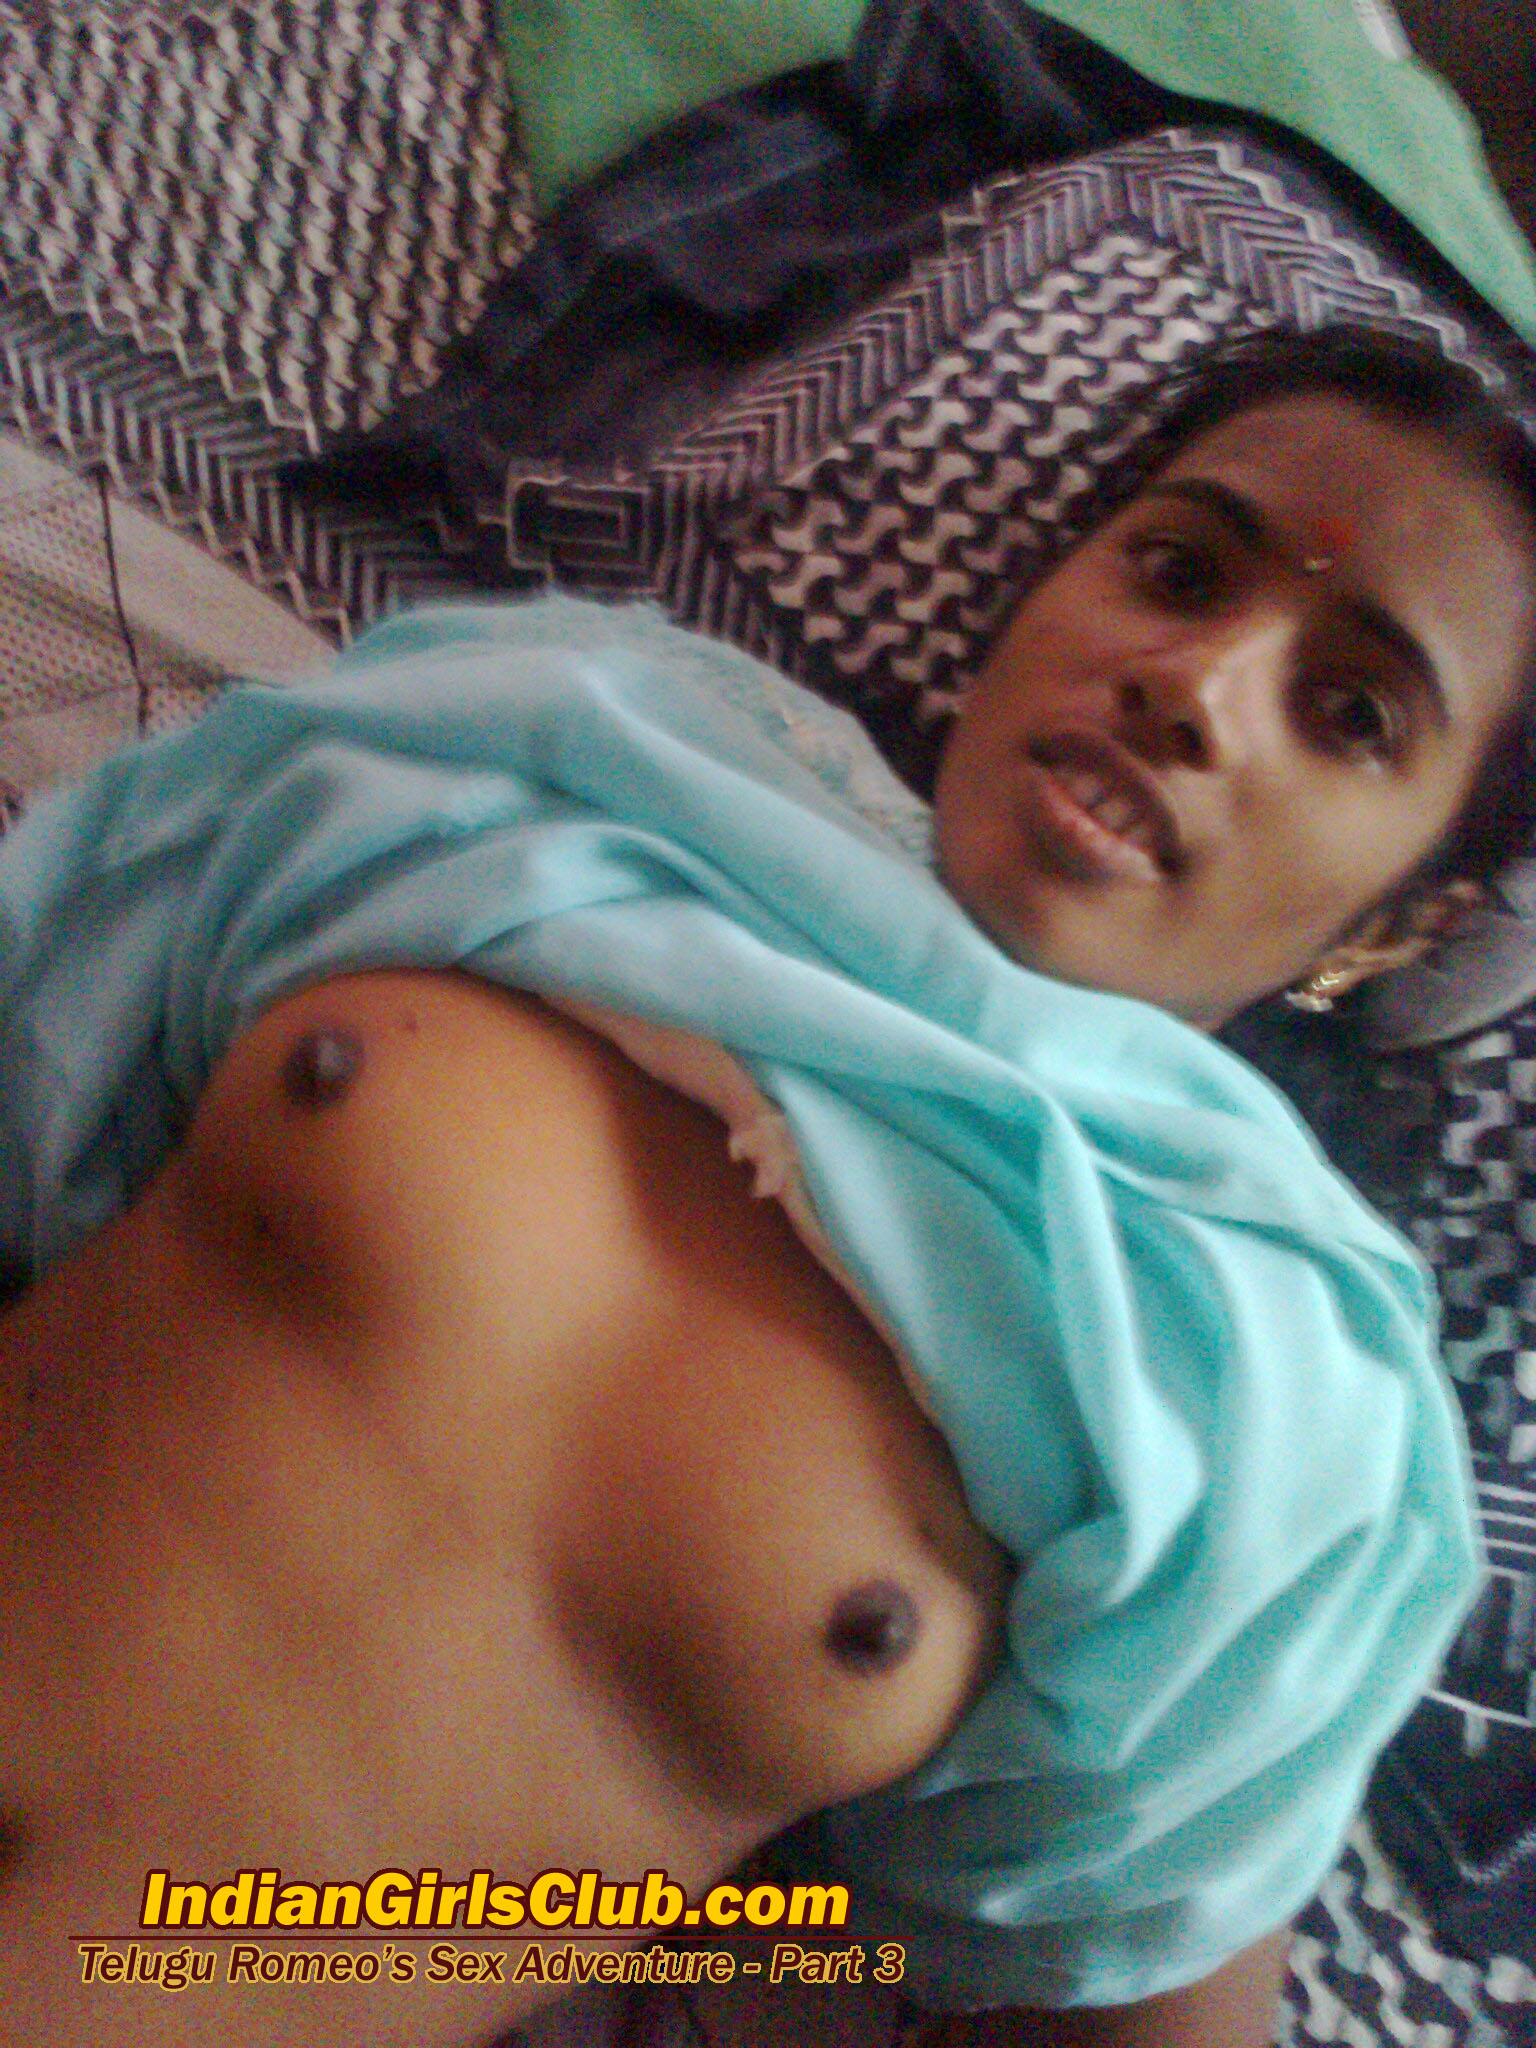 telugu romeo college girls sex 357 - Indian Girls Club image